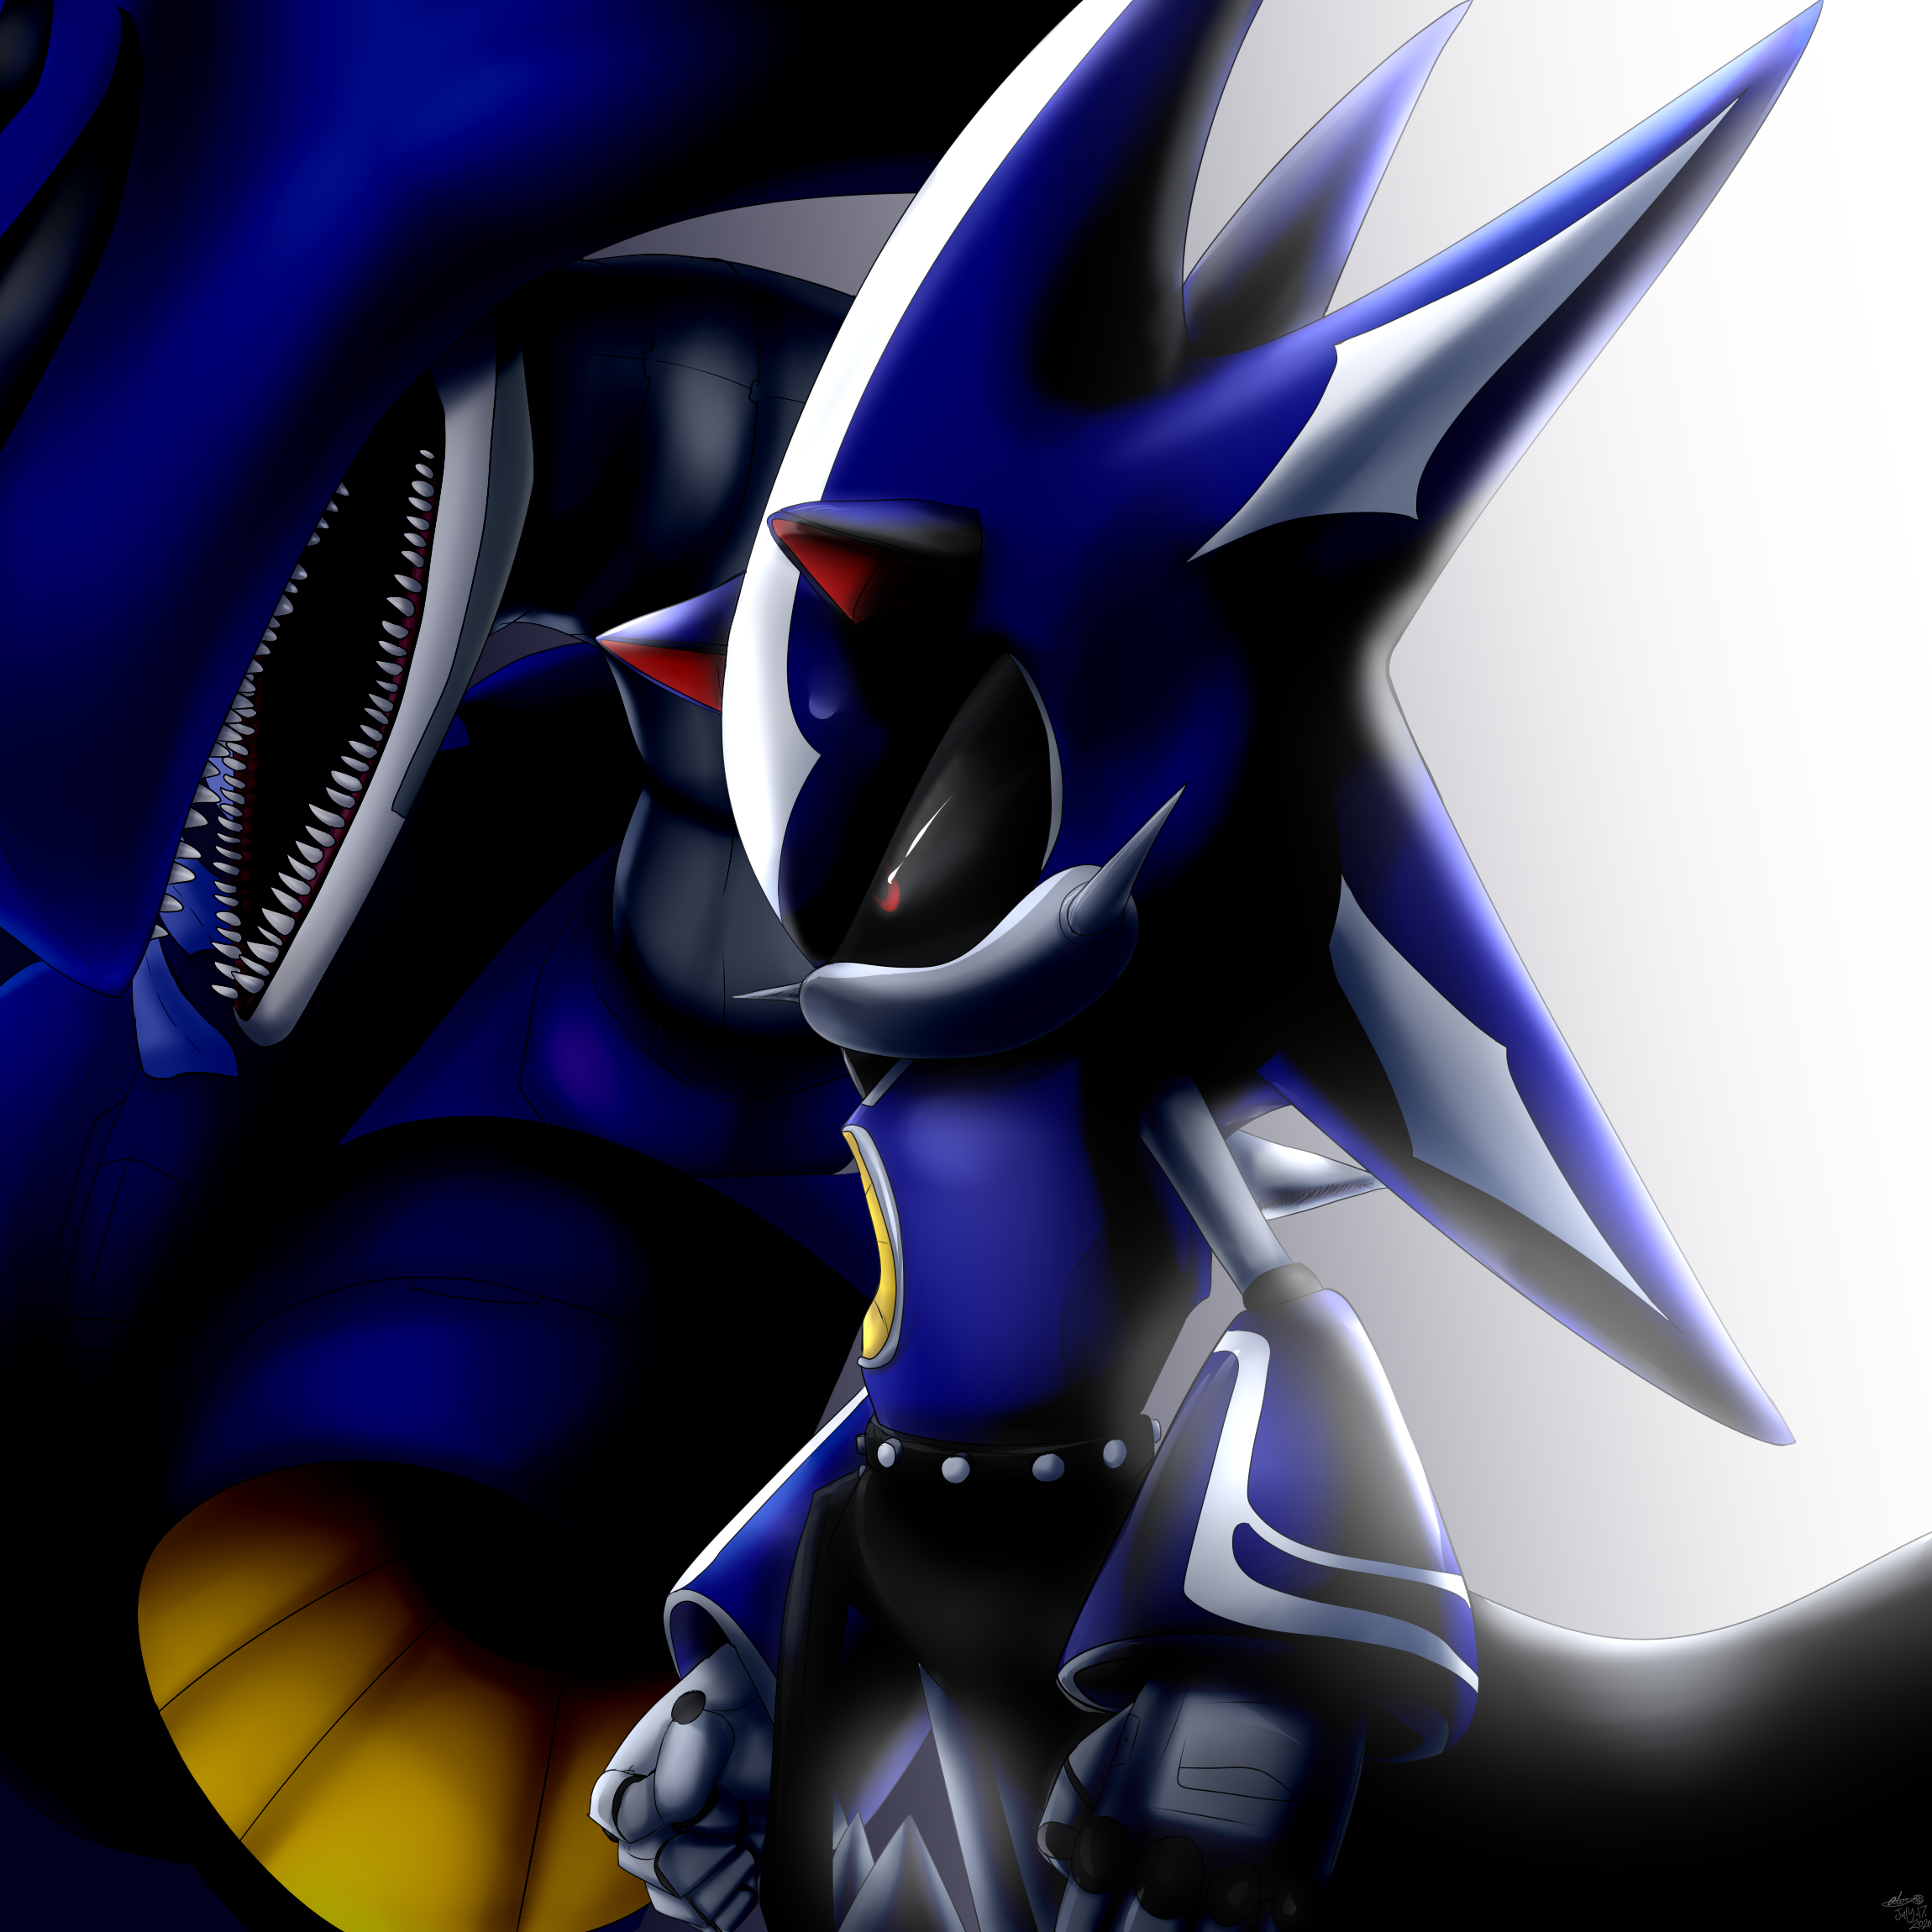 Super Neo Metal Sonic by cybervader311 on DeviantArt